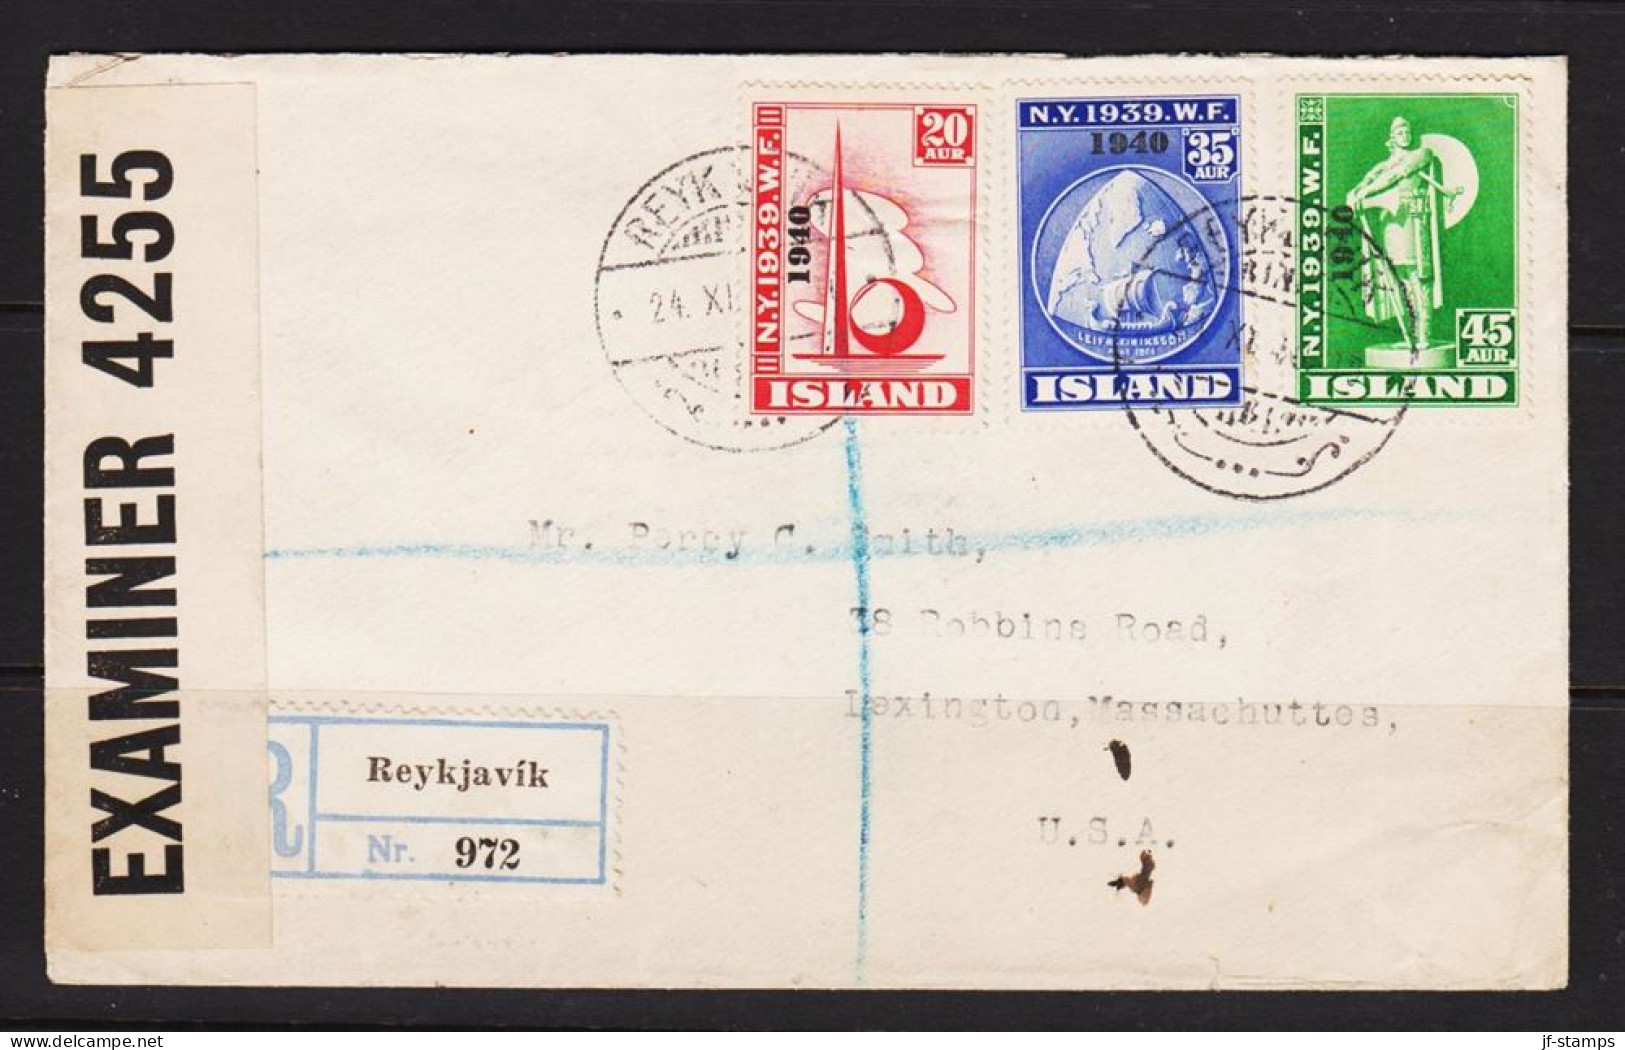 1939. ISLAND. NEW YORK WORLD FAIR. 20 + 35 + 45 AUR Overprinted 1940 On Censored Registe... (MICHEL 2018-220) - JF536975 - Covers & Documents